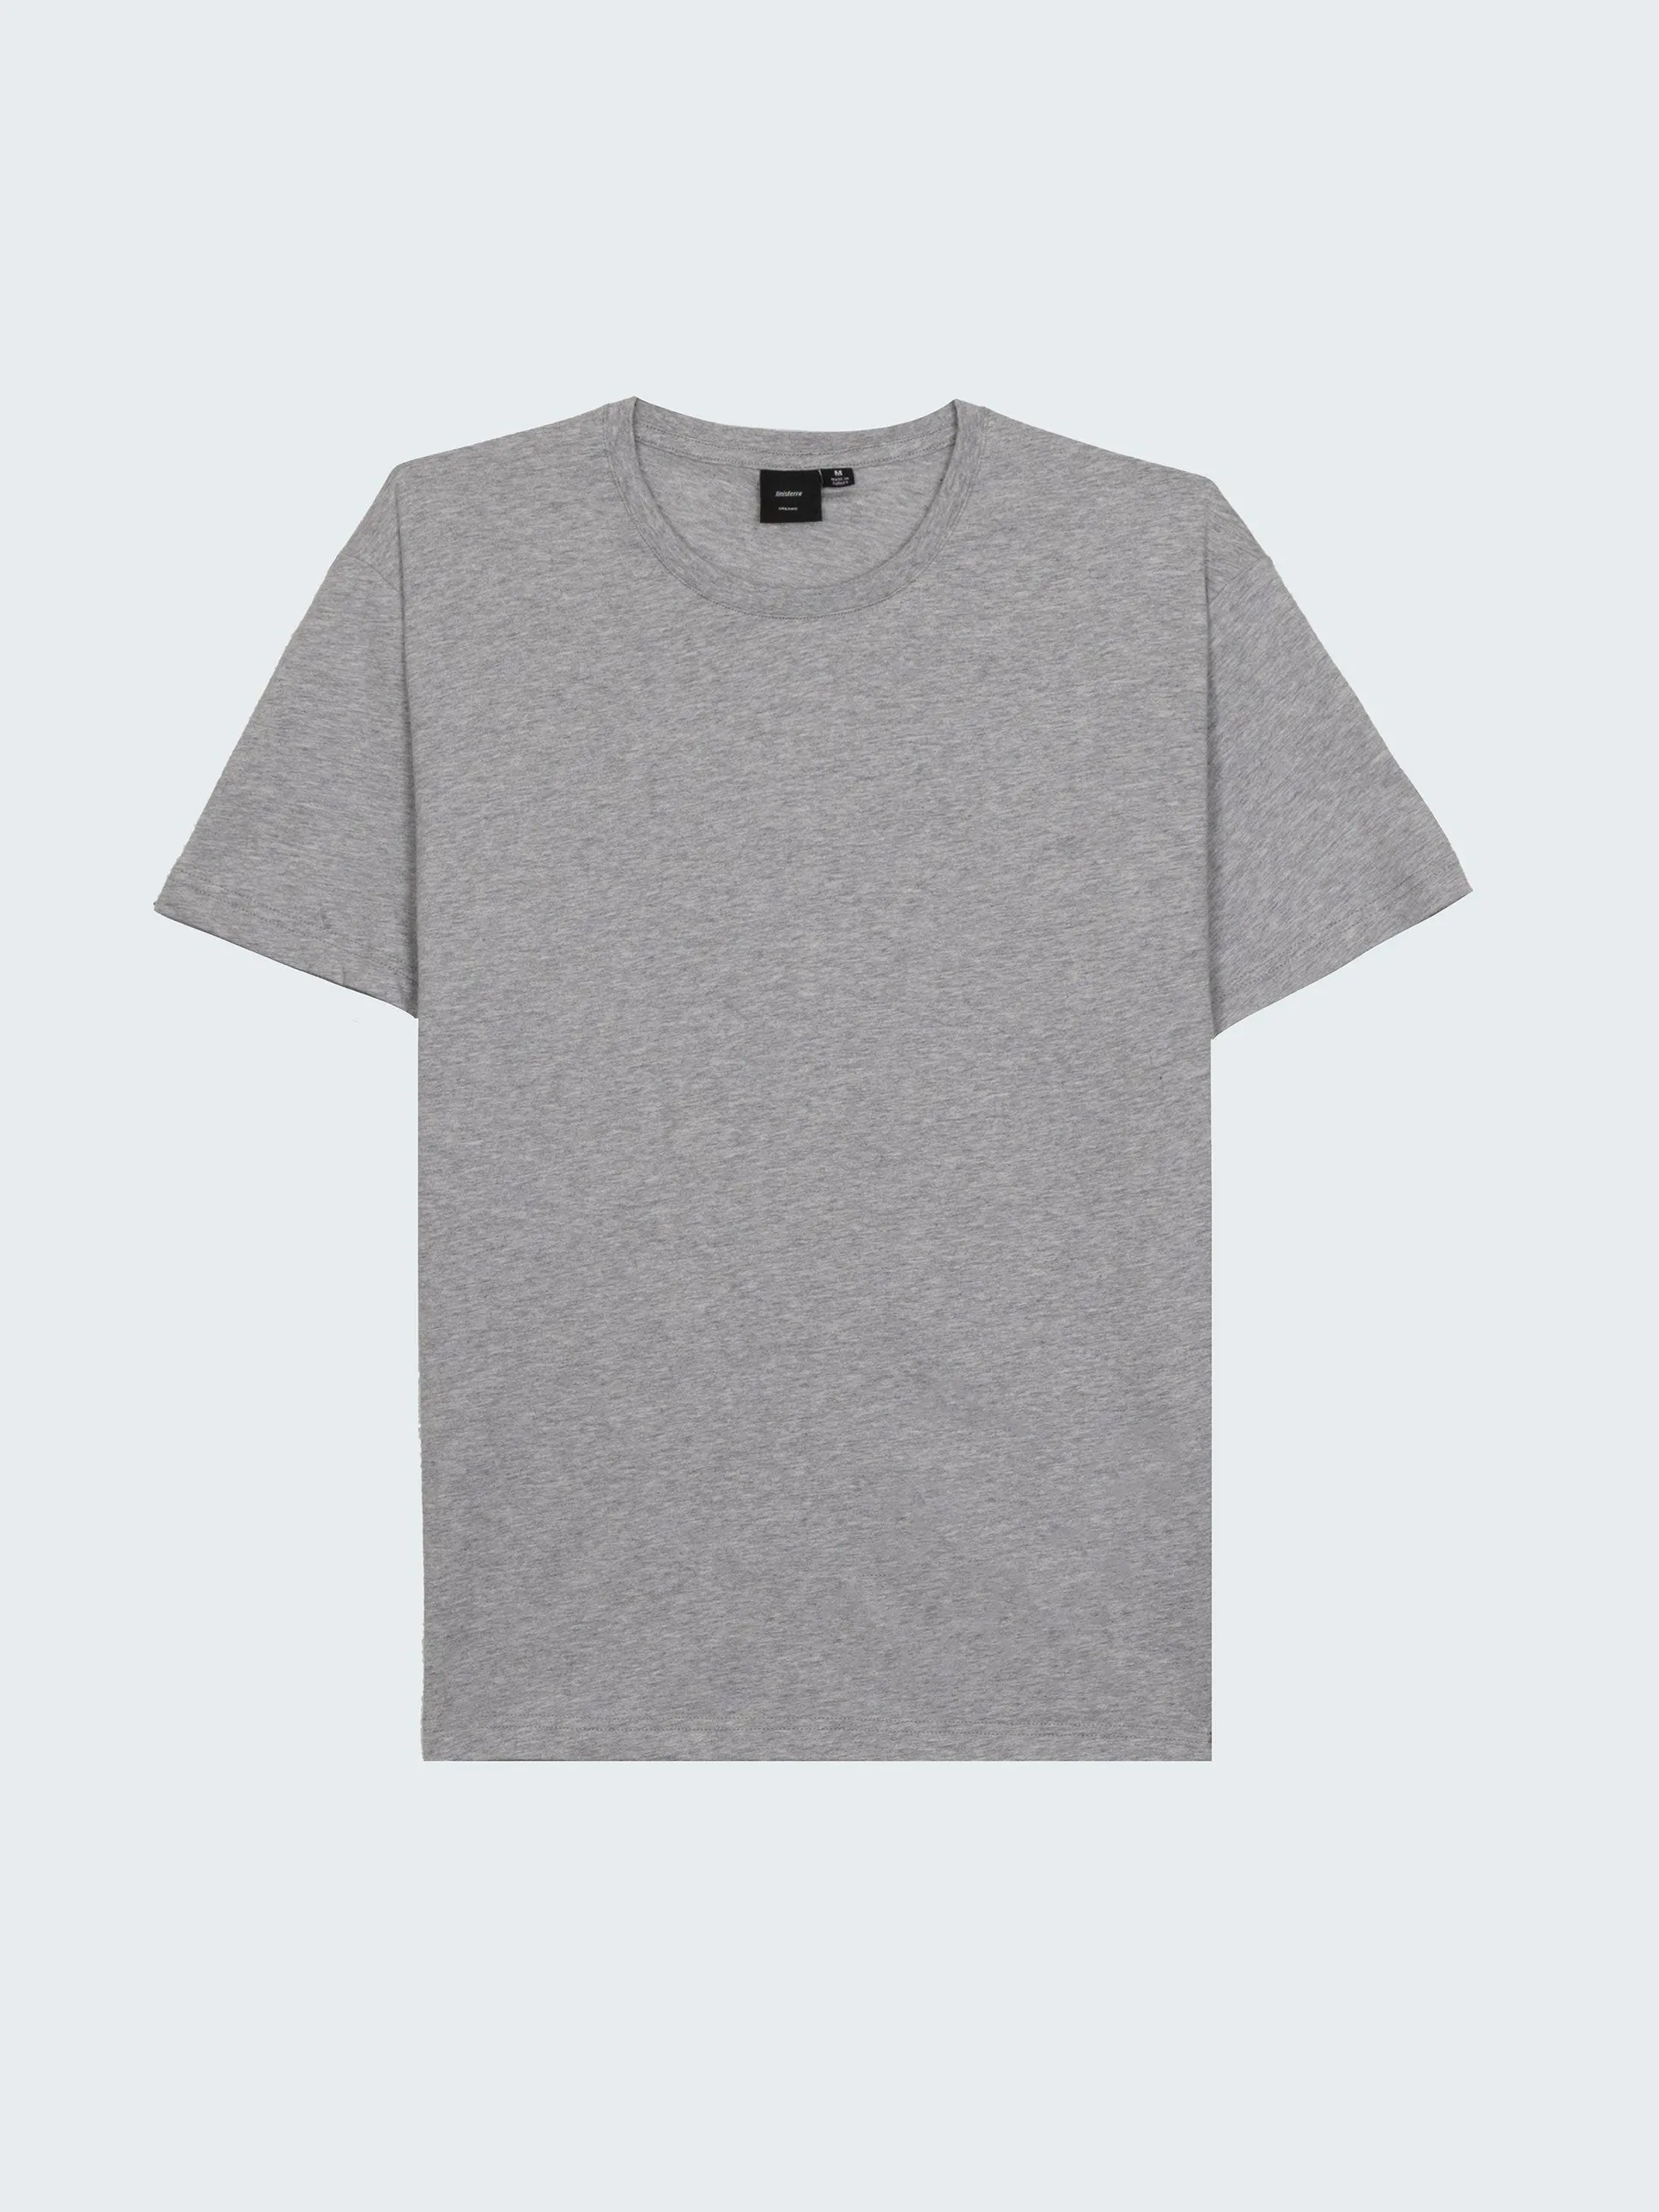 Super soft organic cotton t-shirt in grey marl